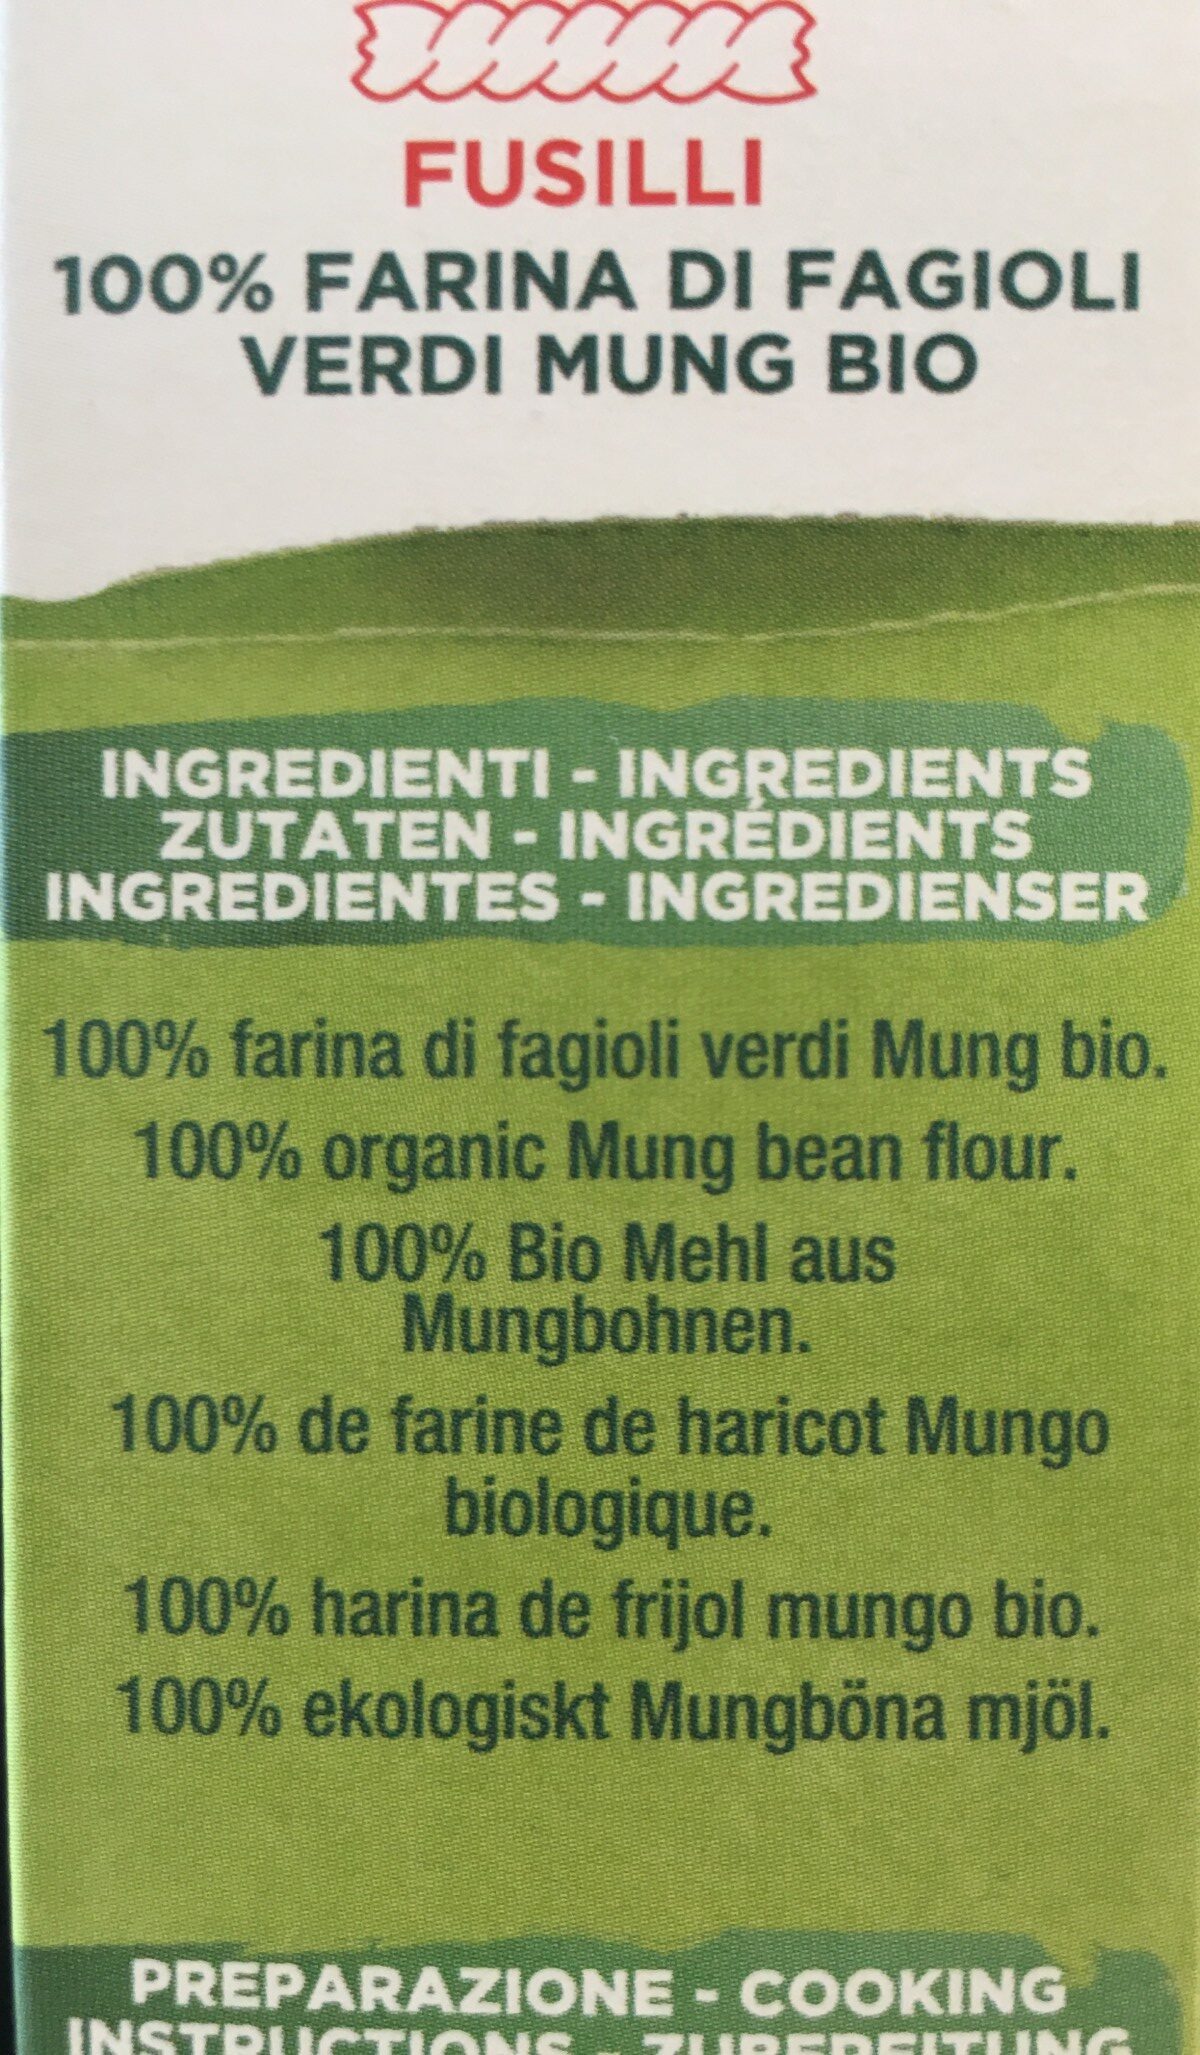 Fusilli di fagioli verdi mung - Ingredienti